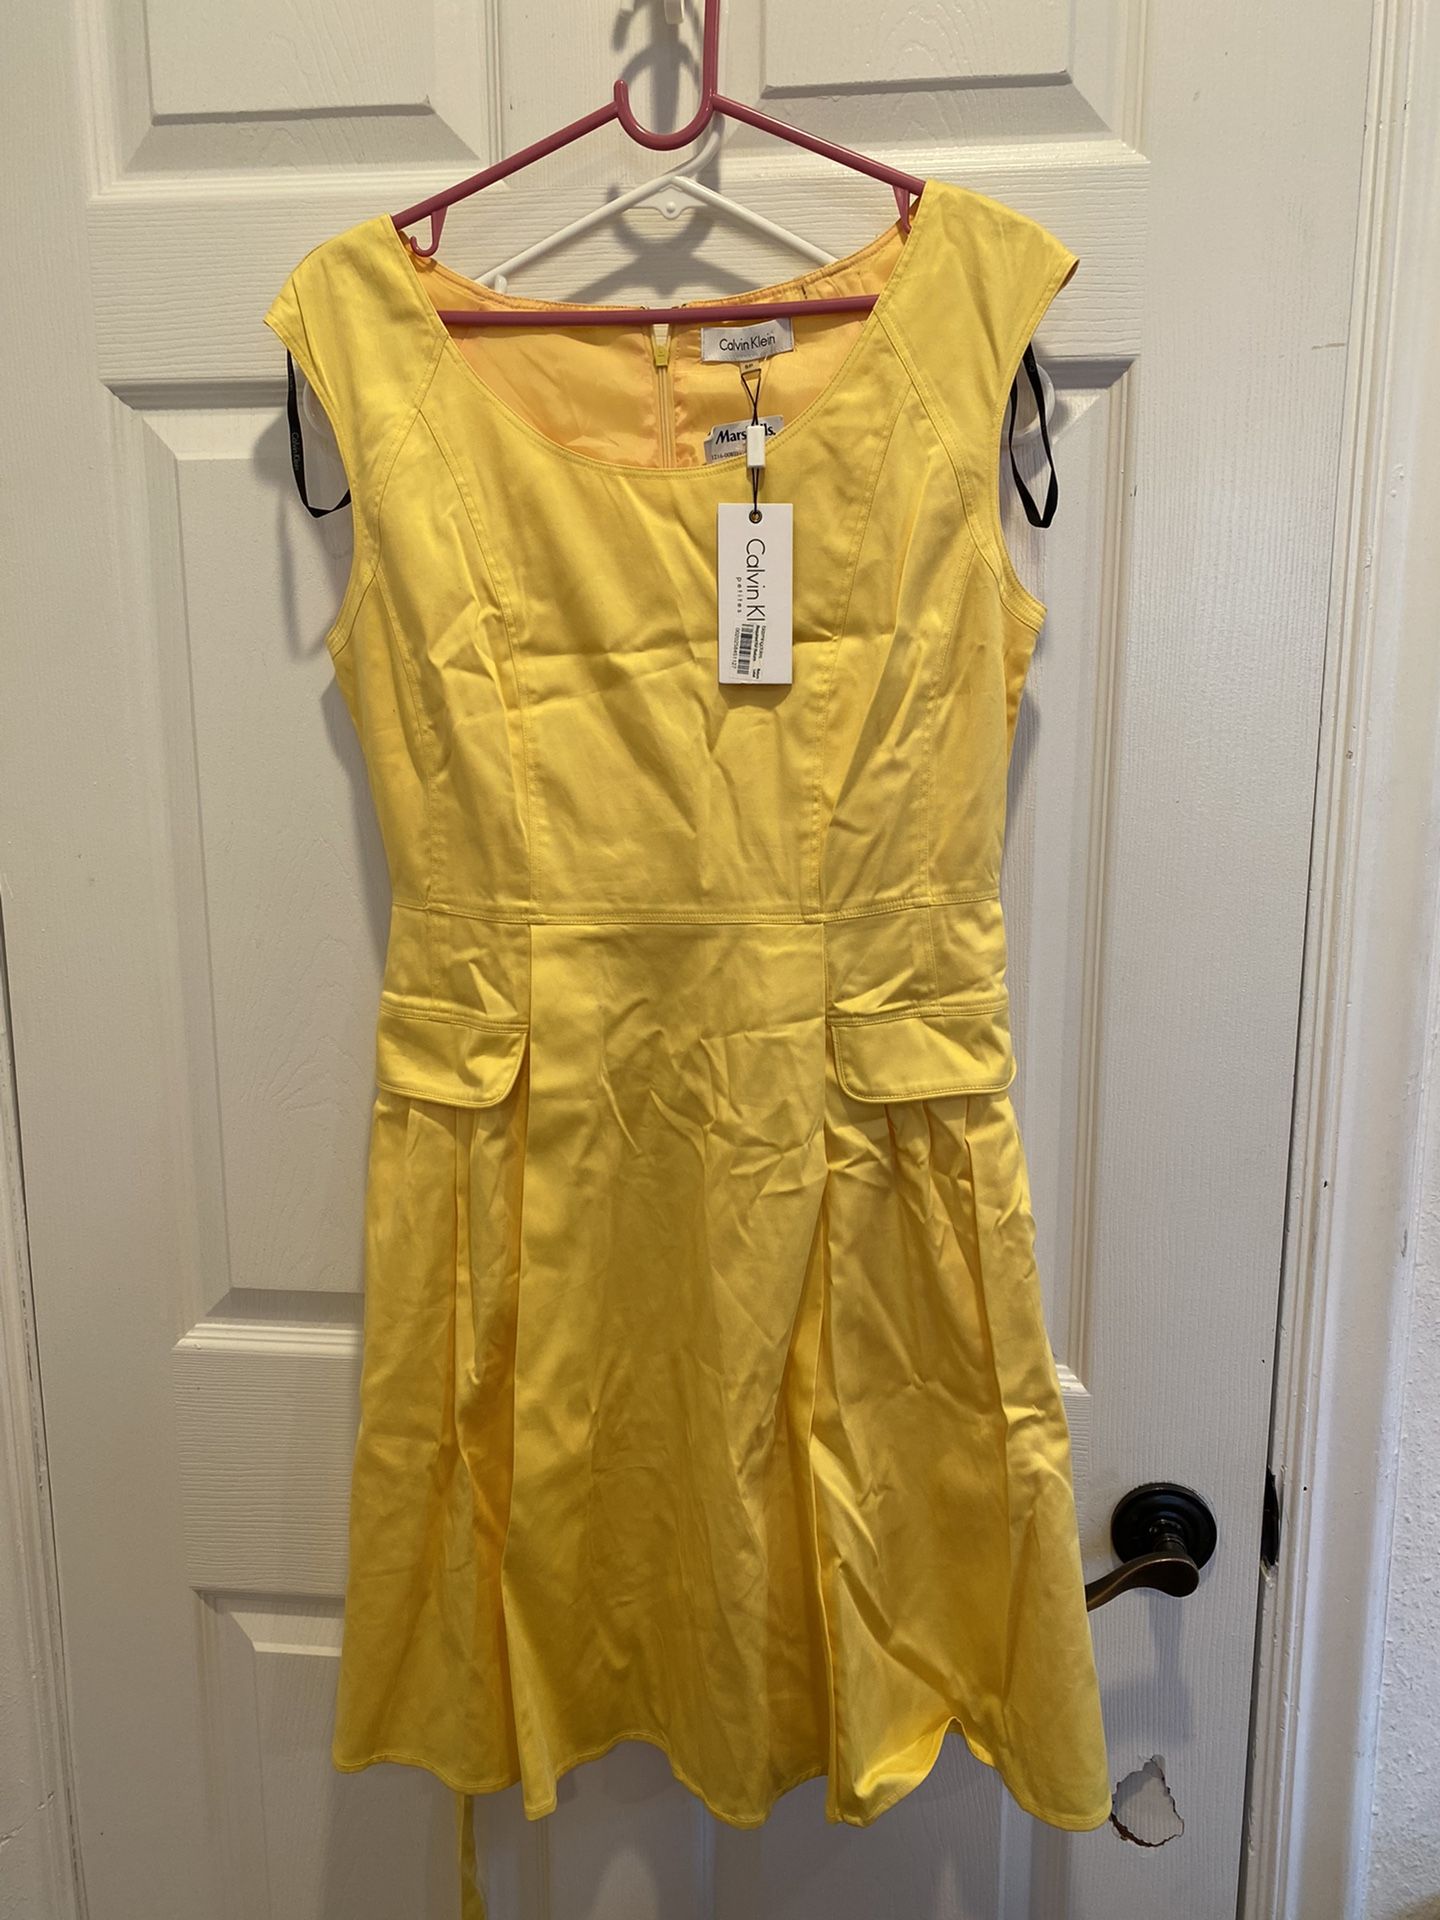 New Yellow Calvin Klein Dress